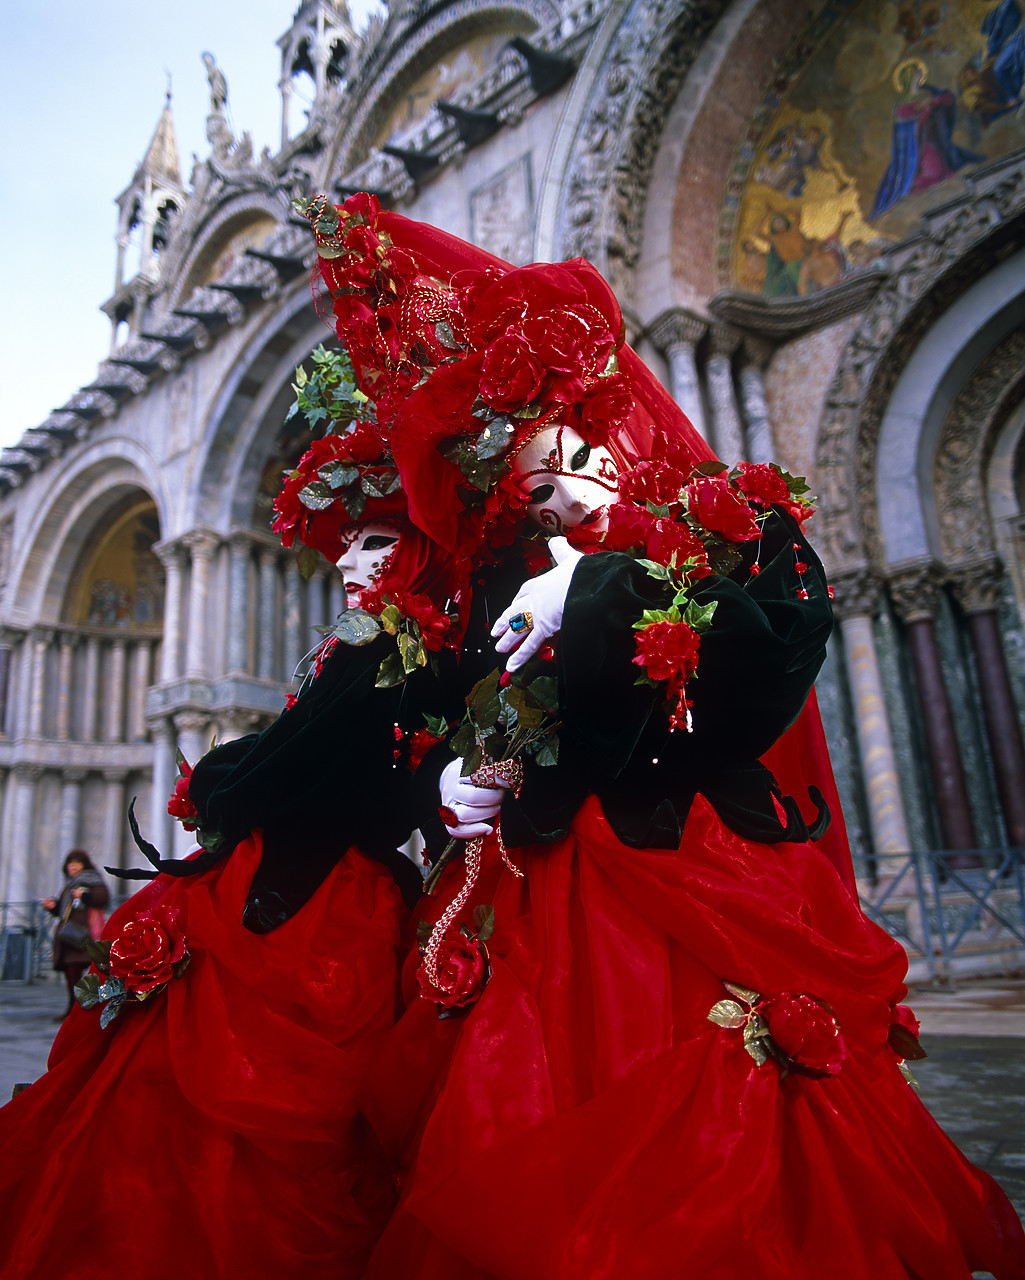 #990097-1 - Venice Carnivale Masks, Venice, Italy